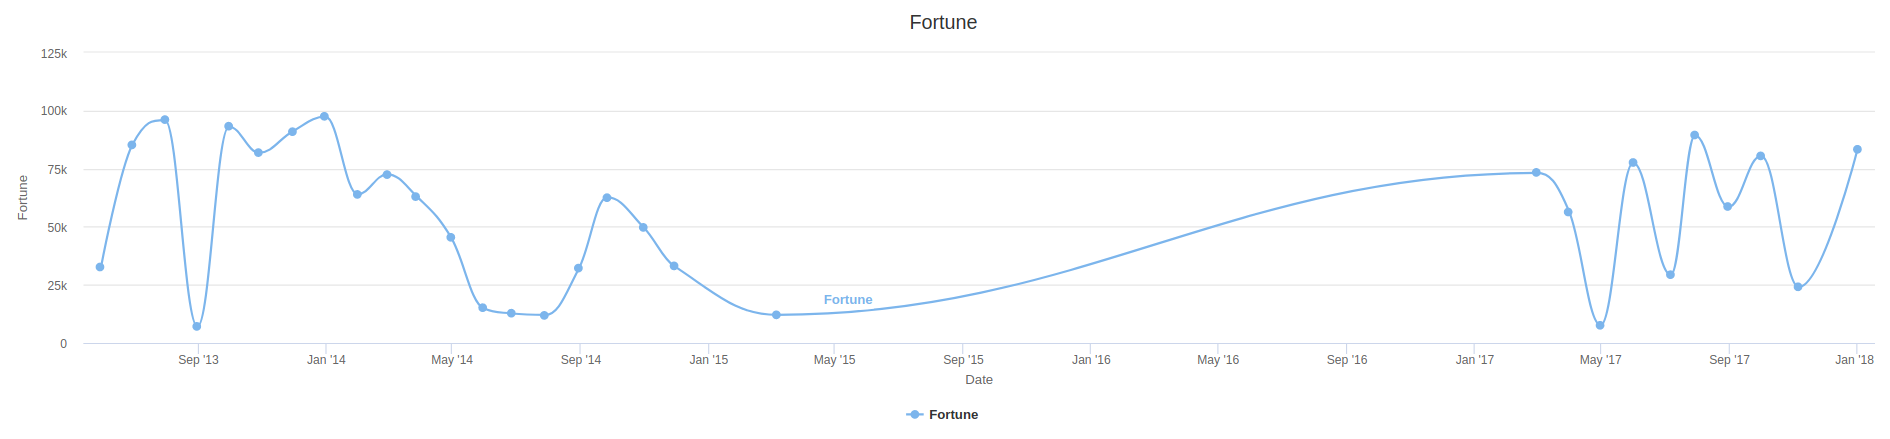 Web interface fortune graph